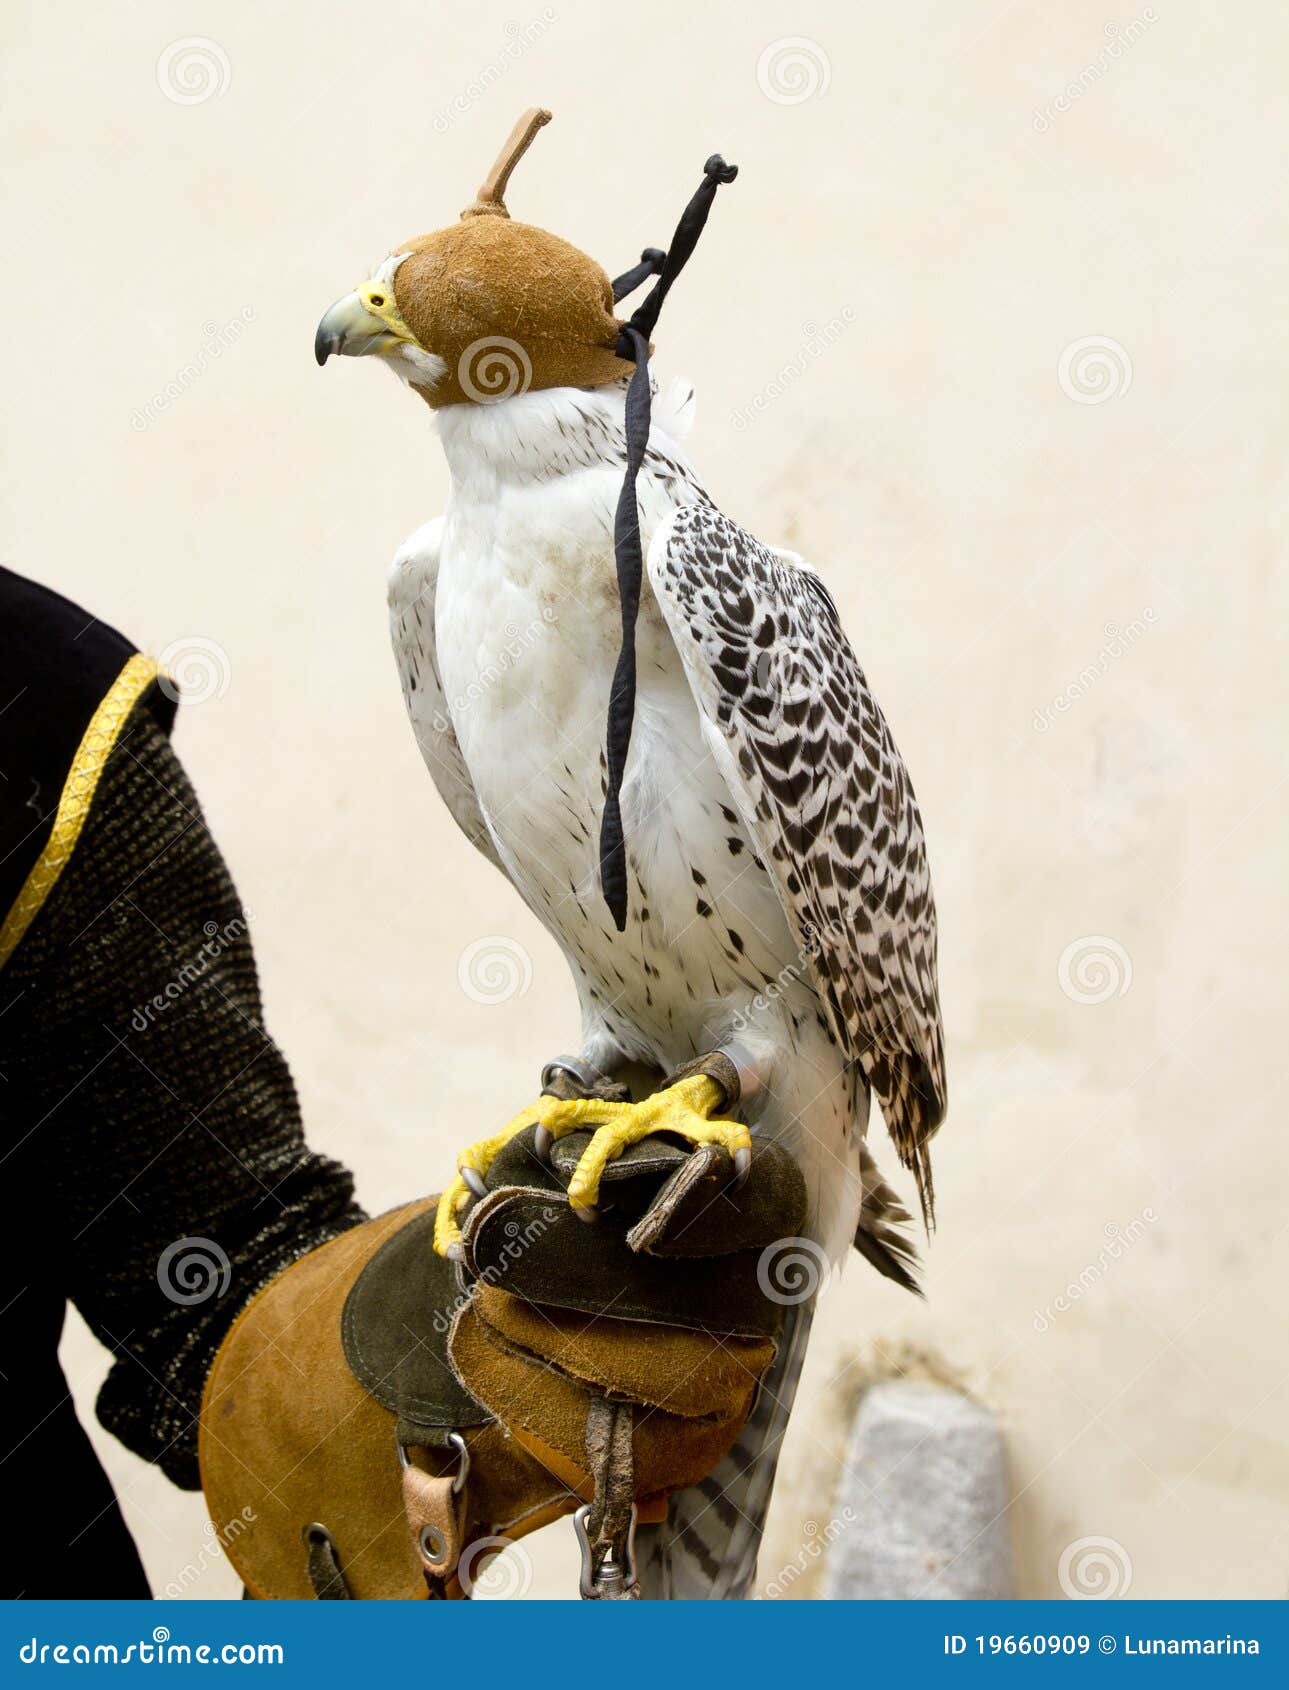 falconry falcon rapacious bird in glove hand